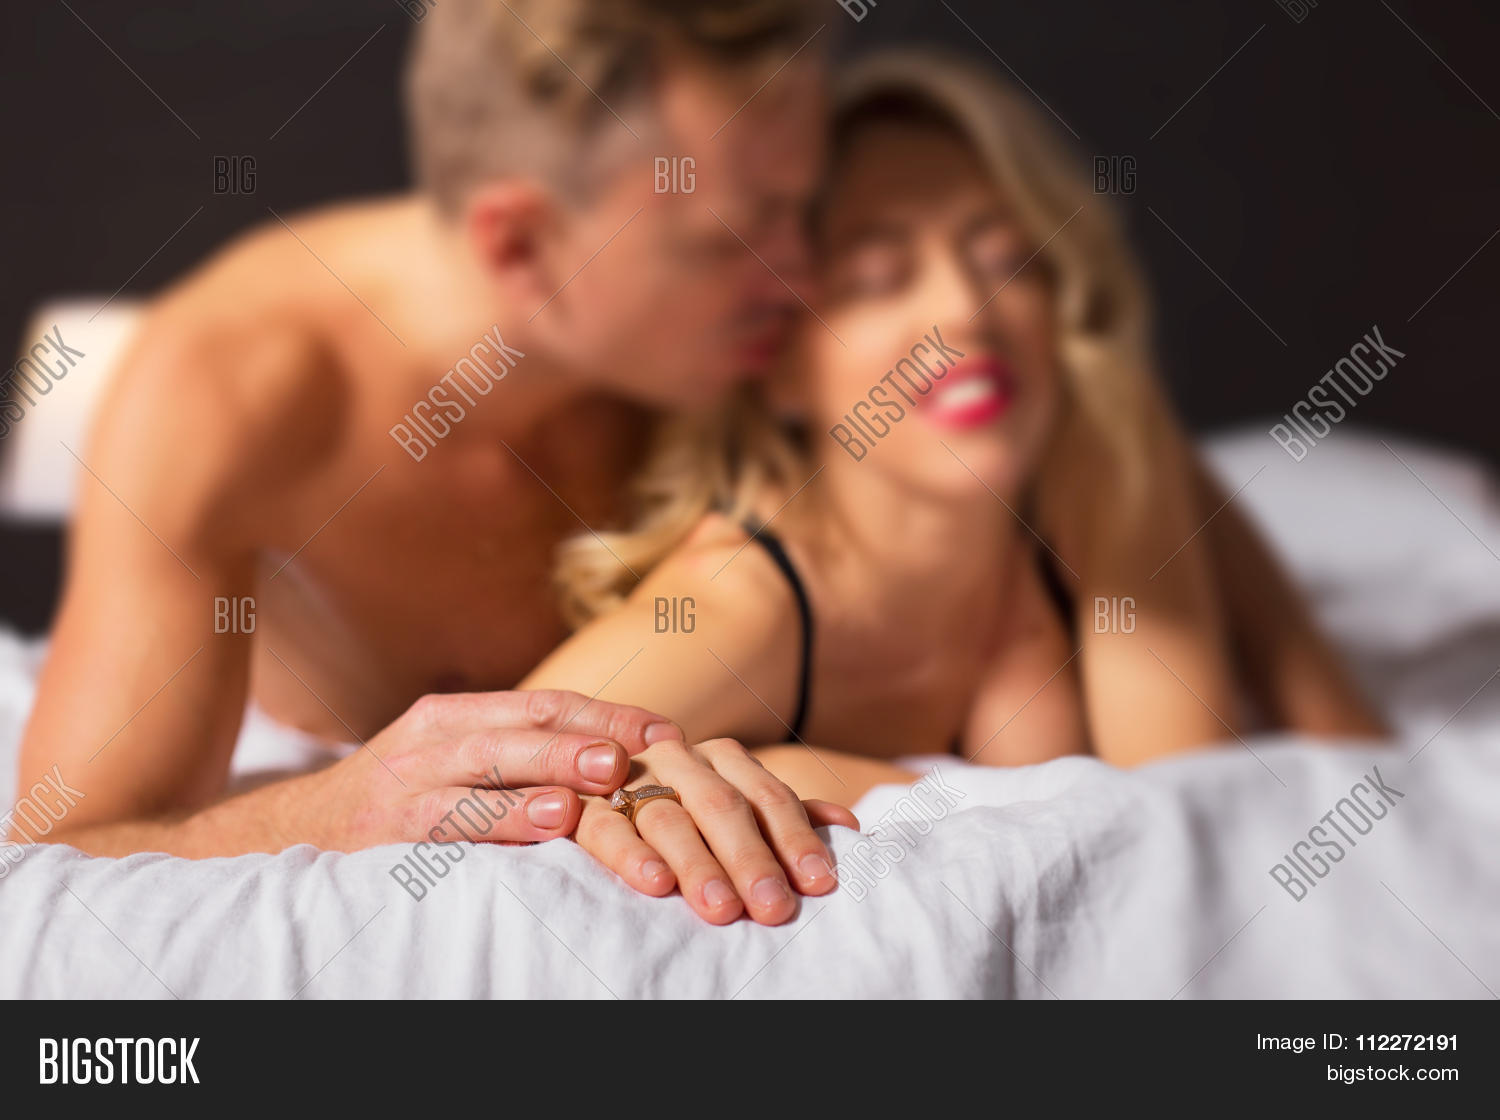 man woman making love